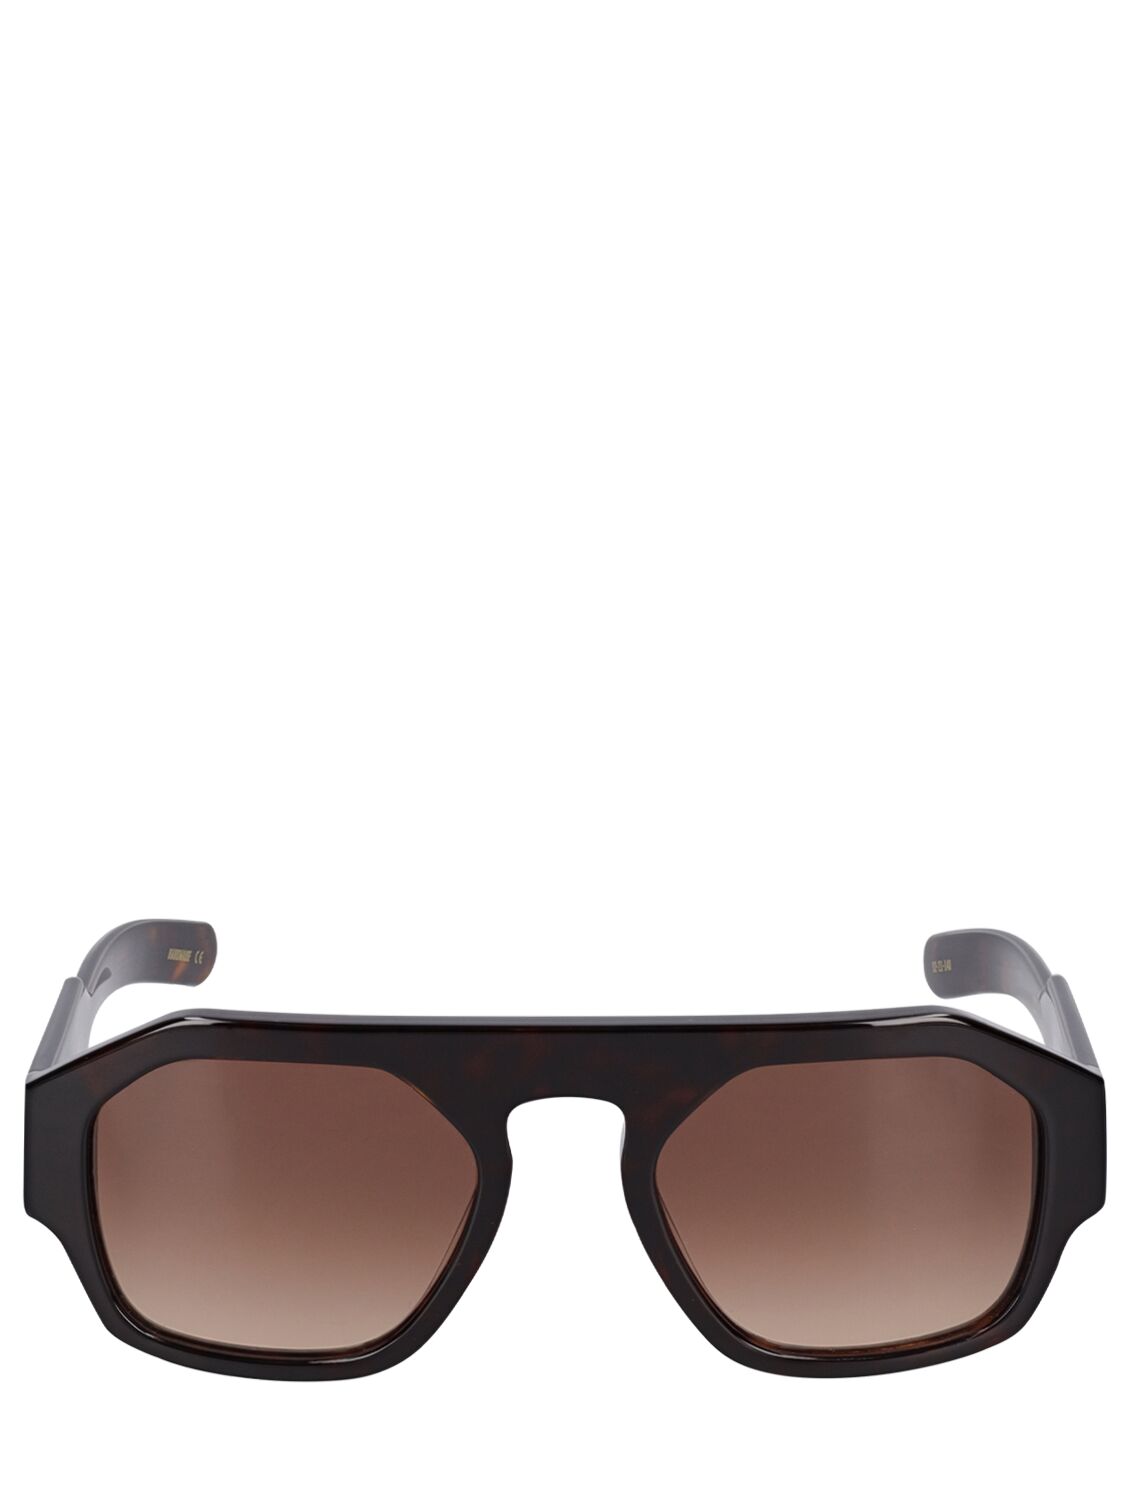 Flatlist Eyewear Lefty Sunglasses In Black